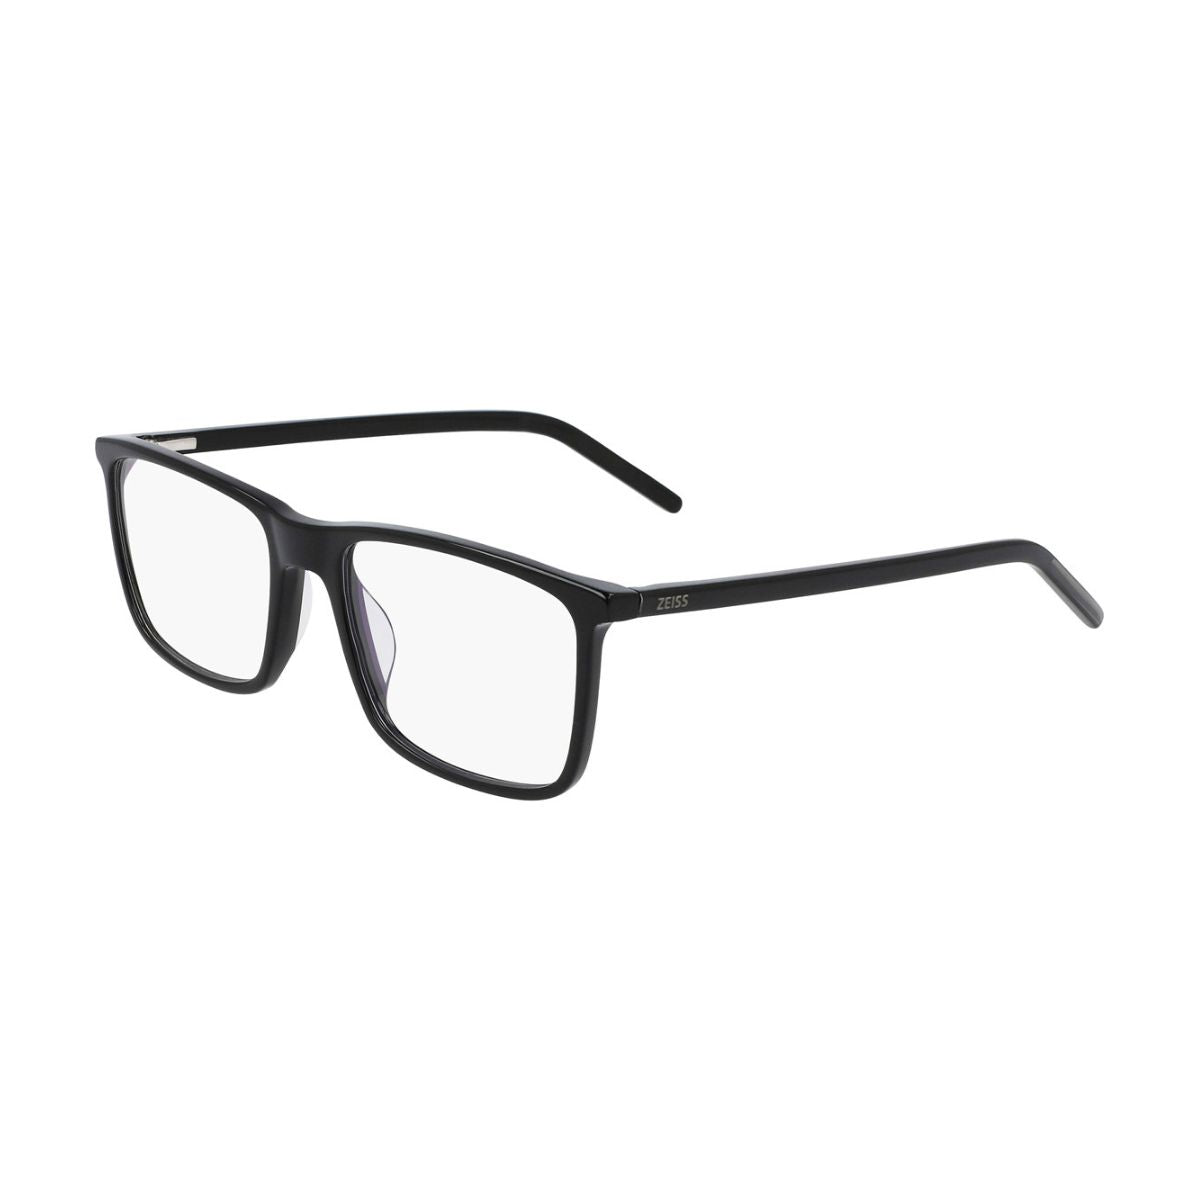 "shop Zeiss 22500 001  eyewear glasses frame for men's at optorium"